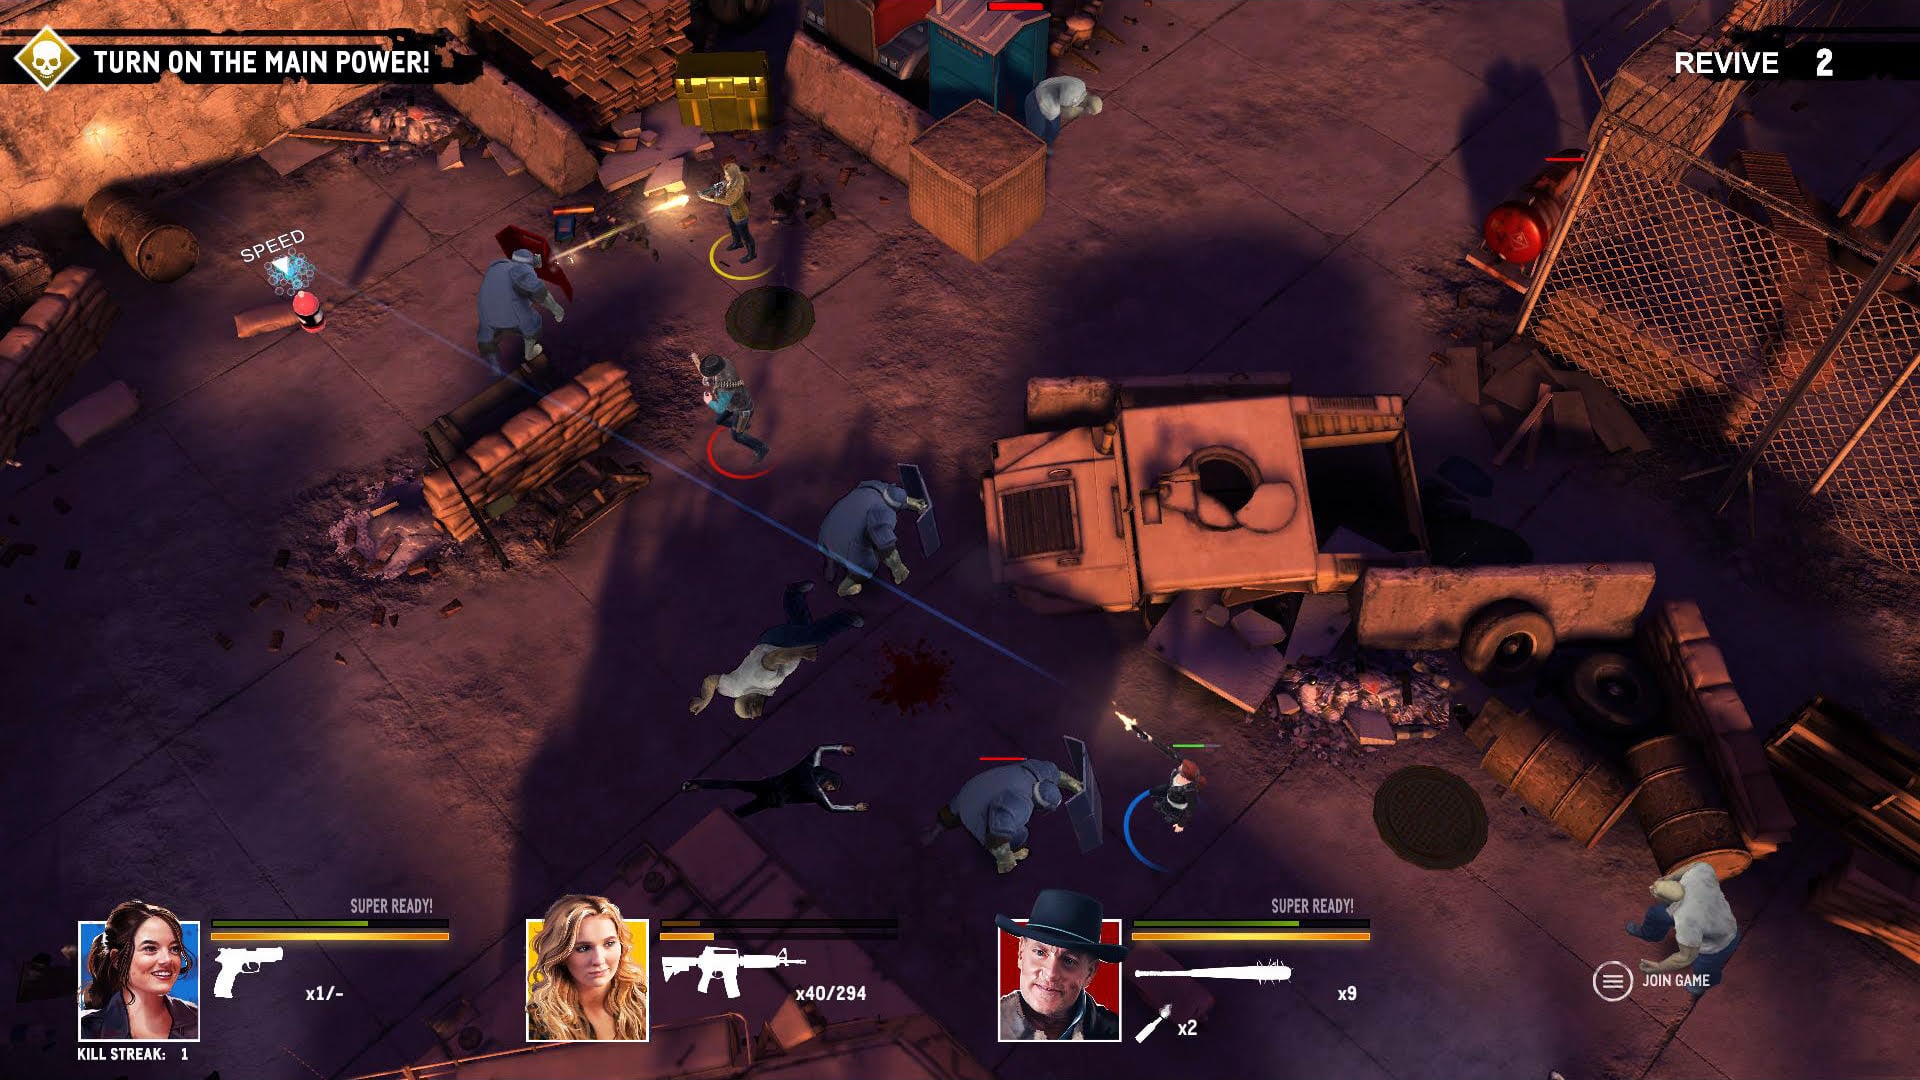 Zombieland: Double Tap - Road Trip Screenshot 3